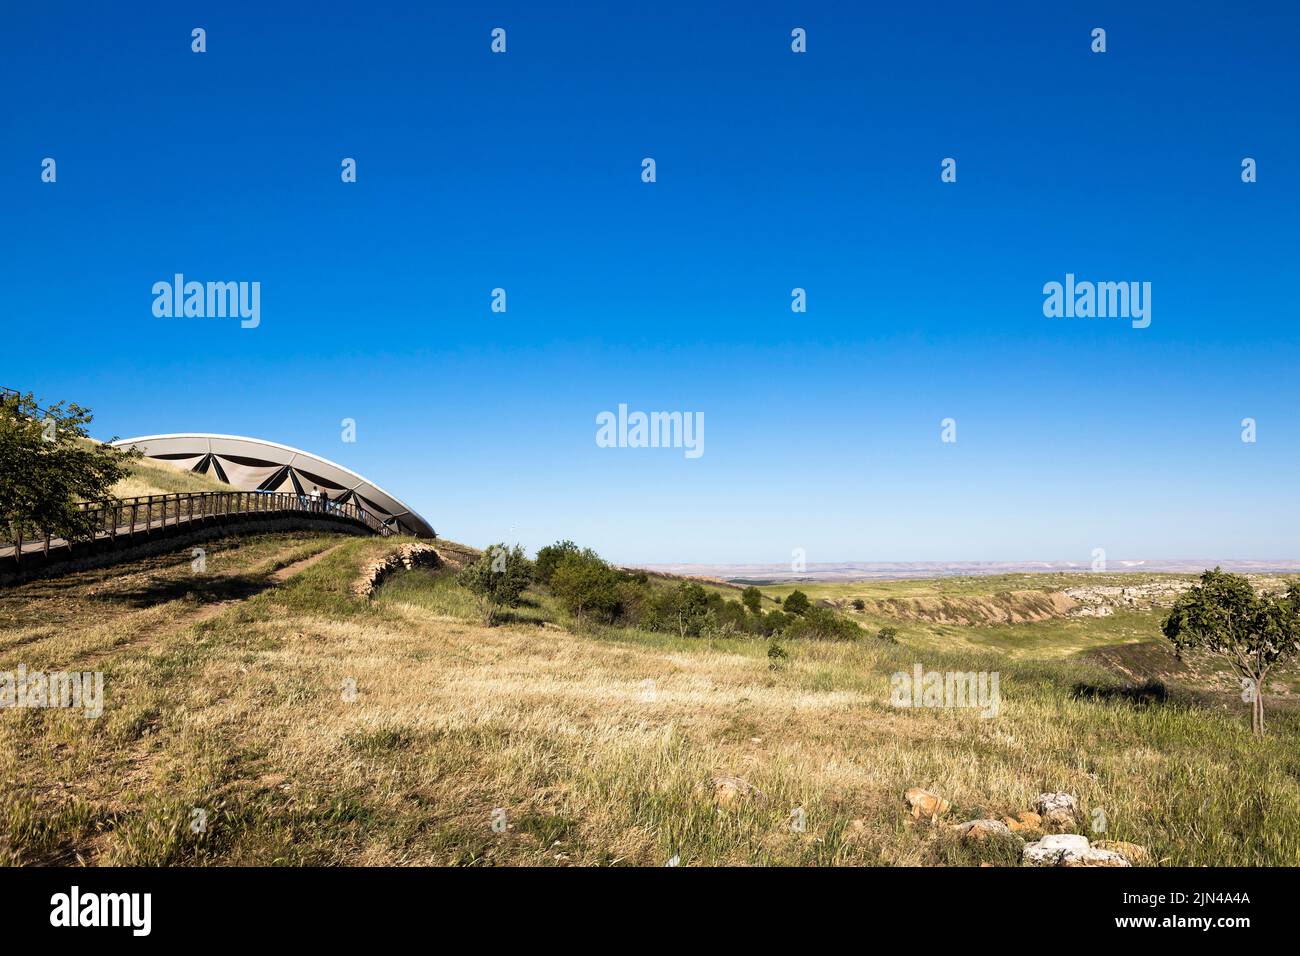 Gobekli tepe(gobeklitepe), world's oldest temple, site's dome on hilltop, Sanliurfa(Urfa), Sanlıurfa province, Turkey, Asia Minor, Asia Stock Photo